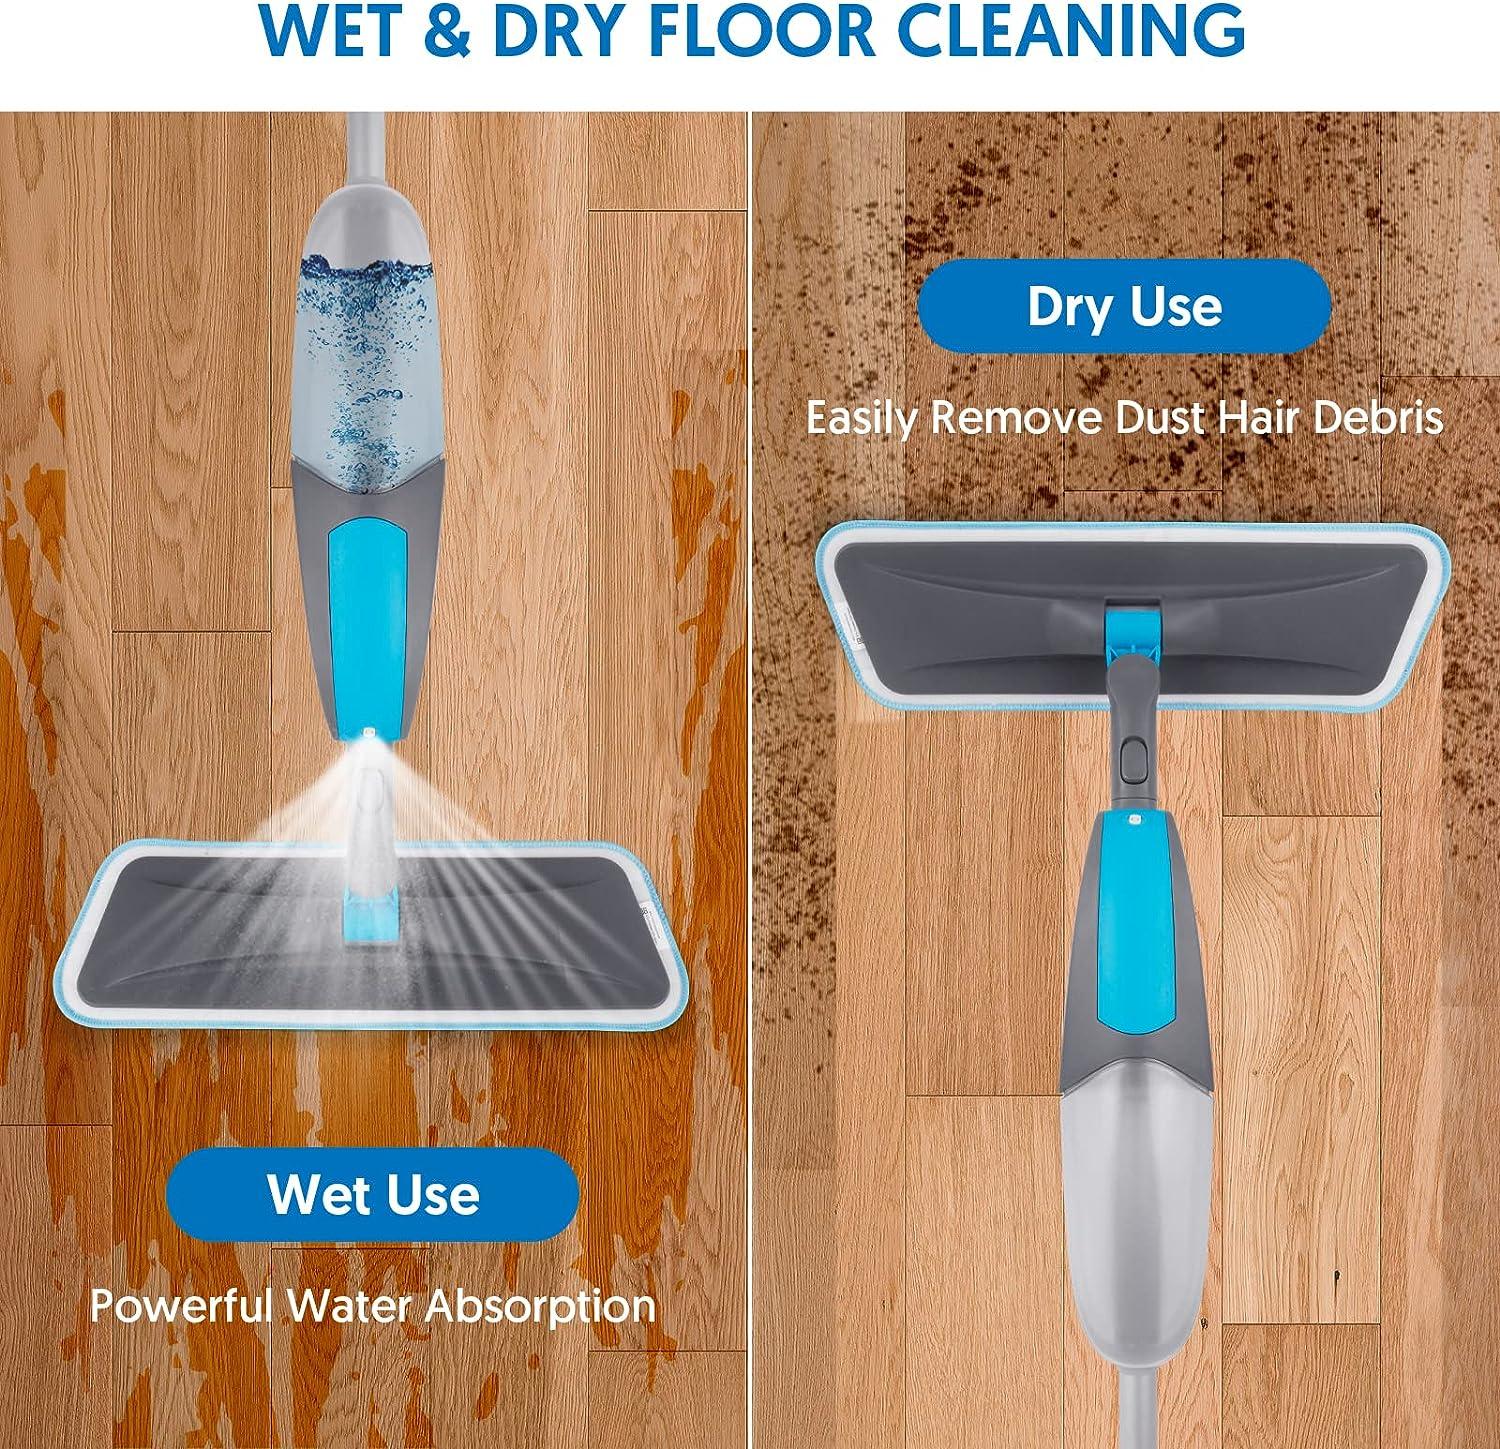 Microfiber Mops for Floor Cleaning - BPAWA Flat Floor Mop with 3